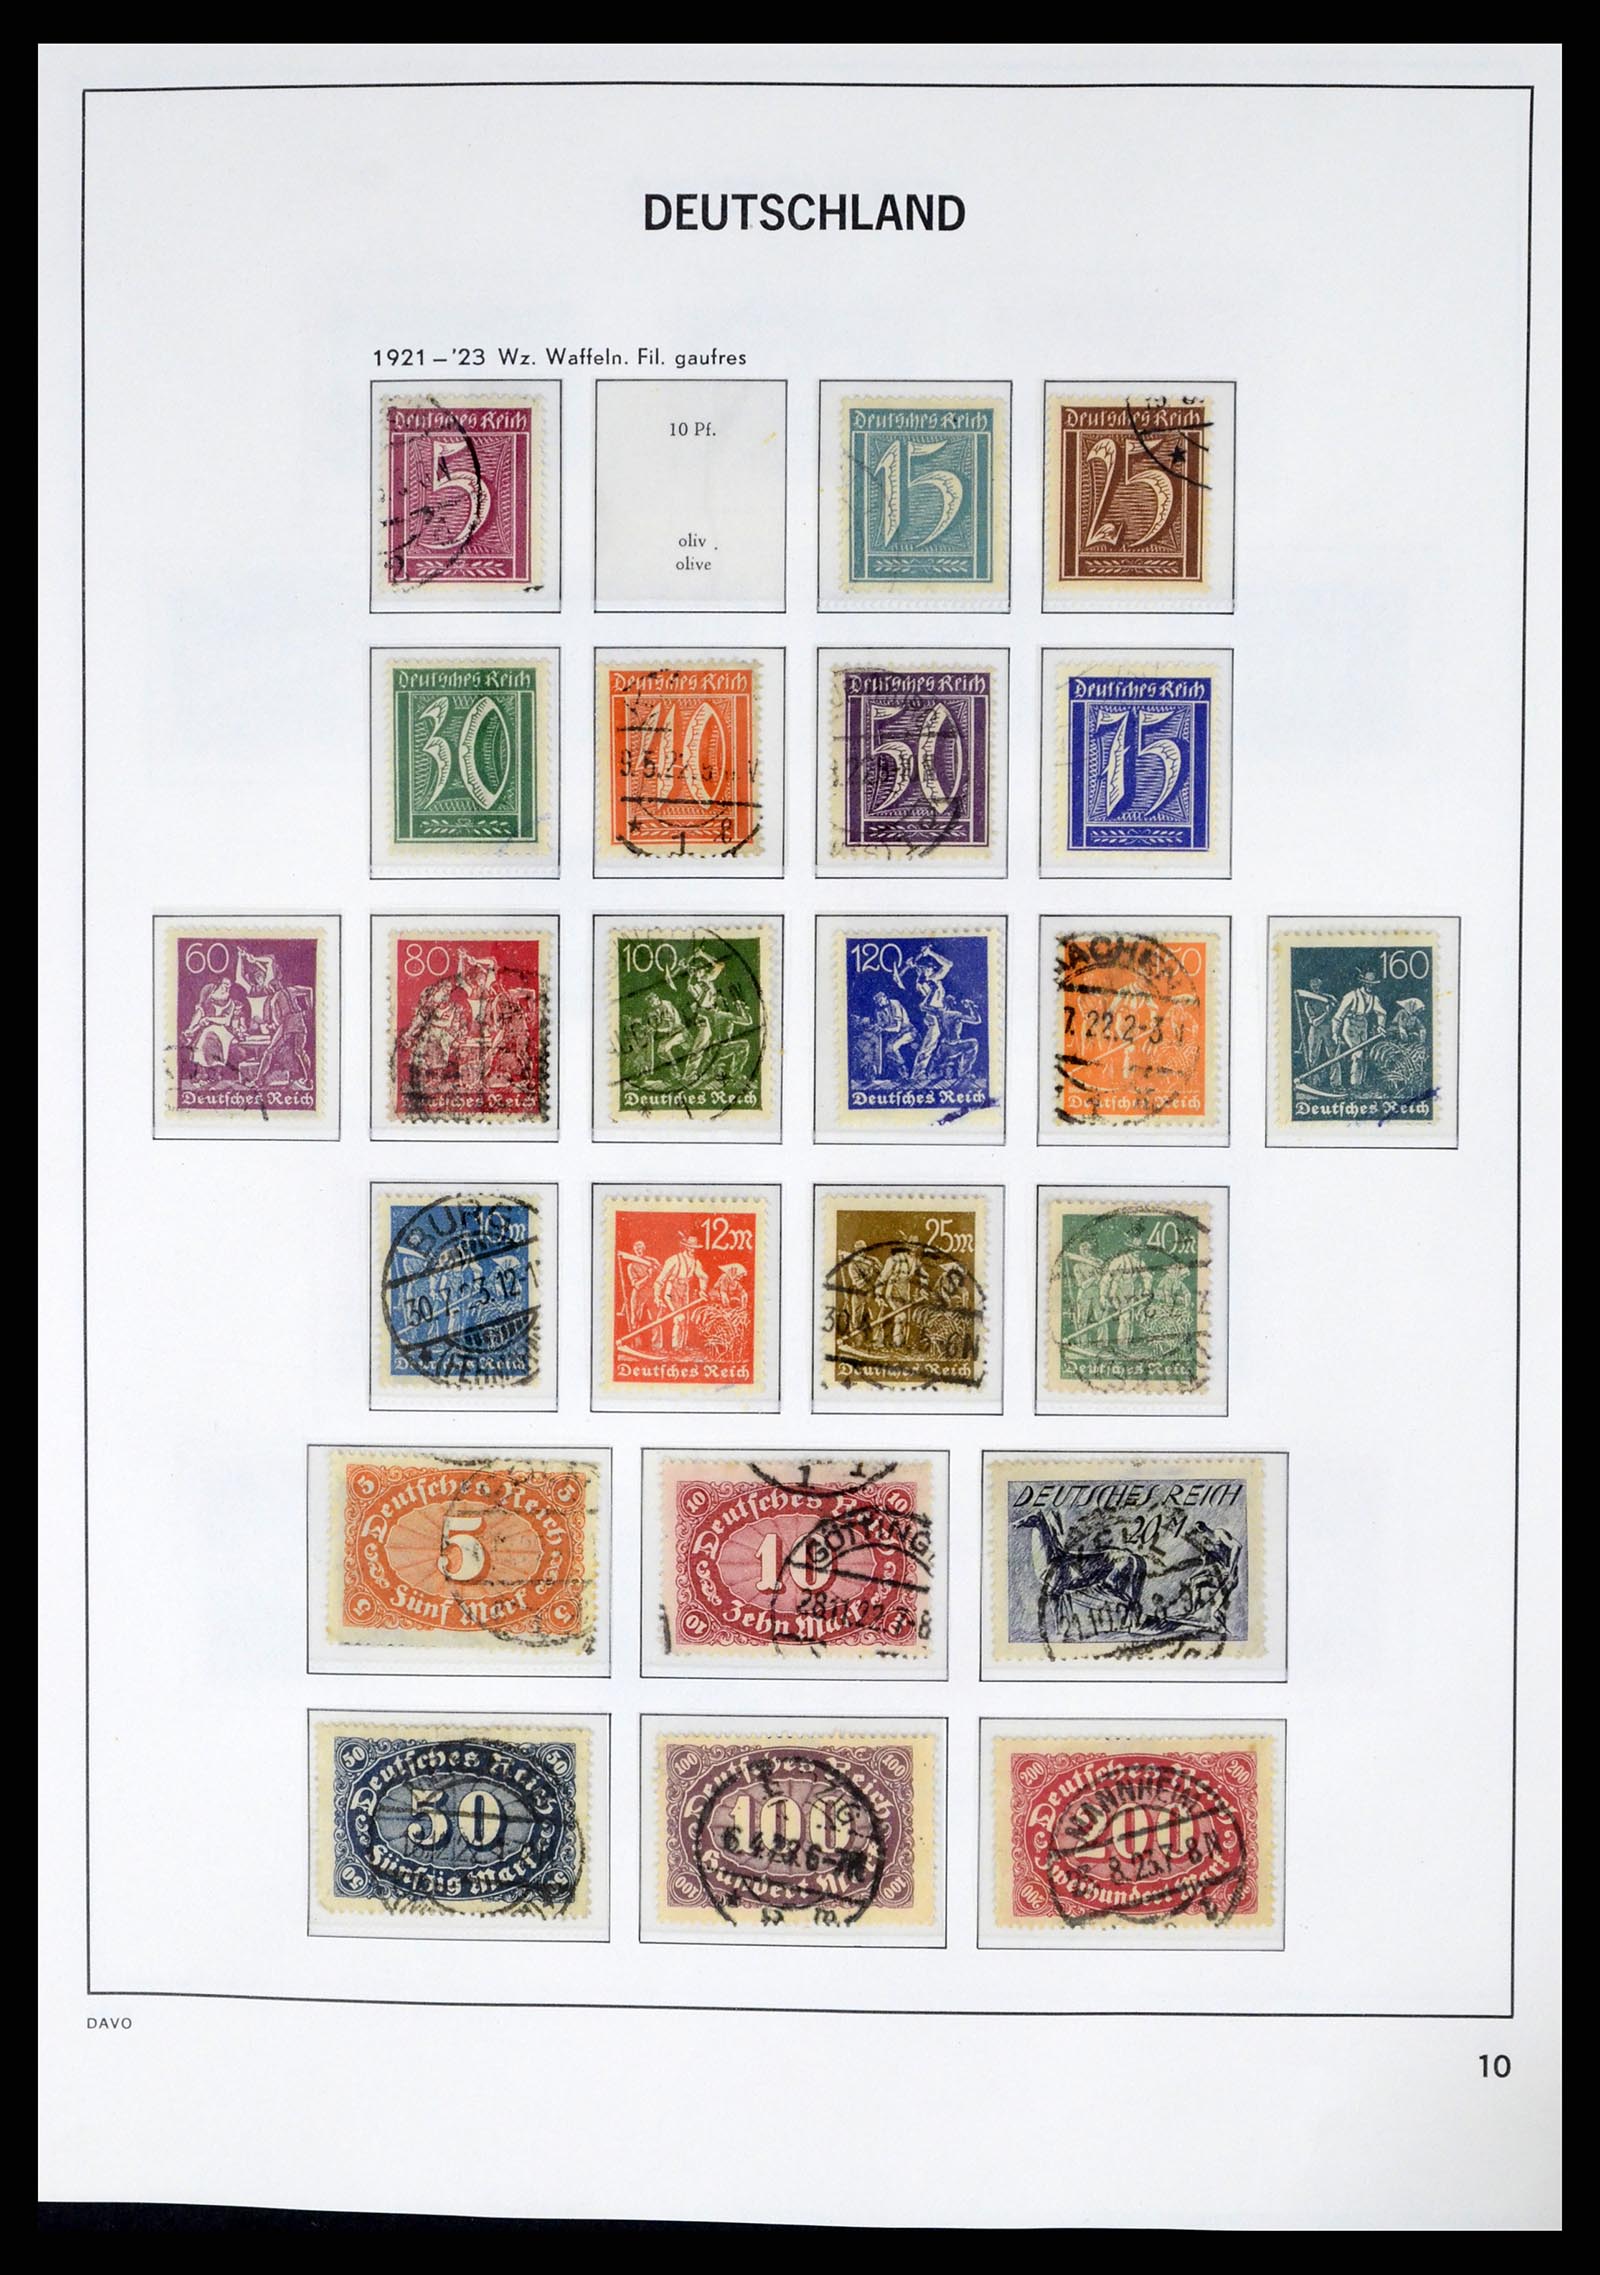 37384 011 - Stamp collection 37384 German Reich 1872-1945.